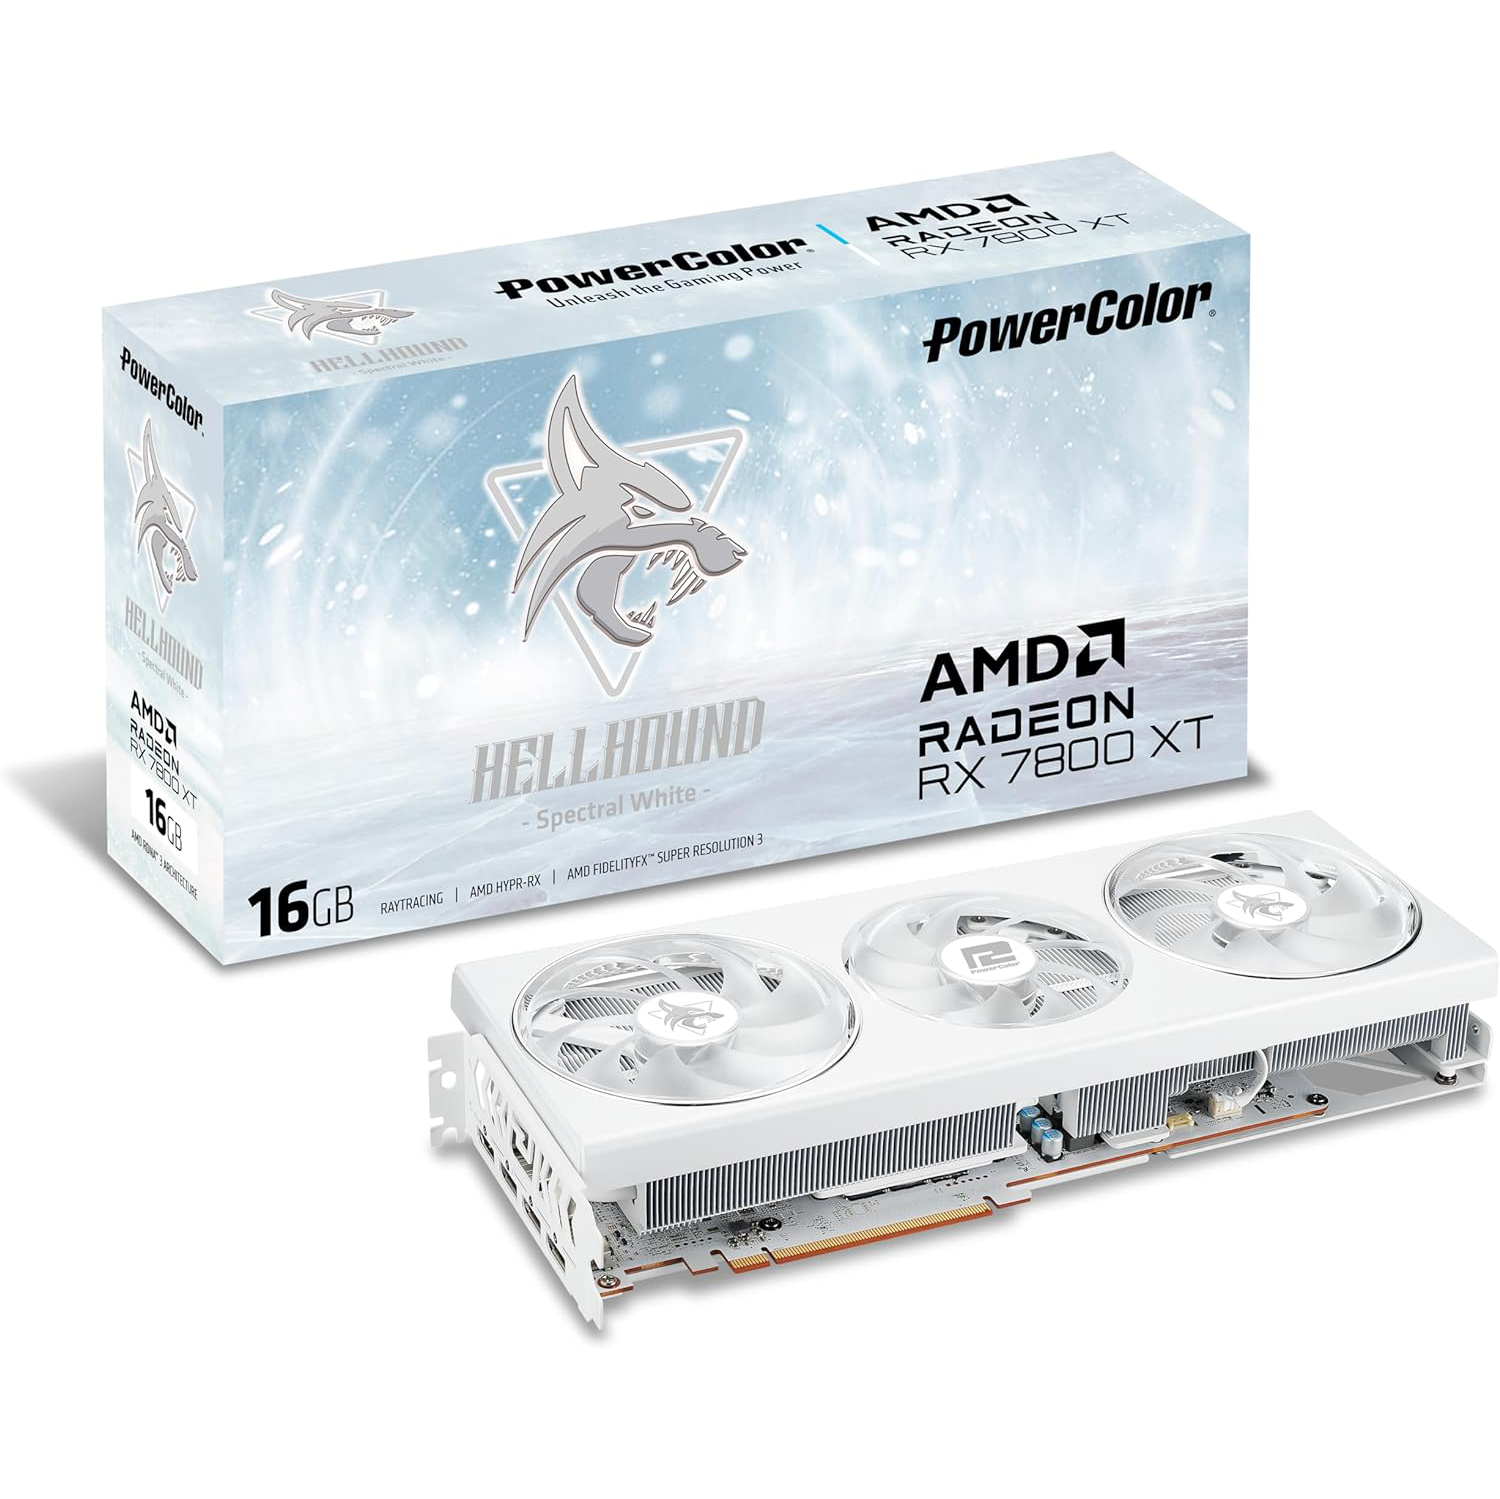 PowerColor Hellhound Spectral White AMD Radeon RX 7800 XT 16GB GDDR6 Graphics Card